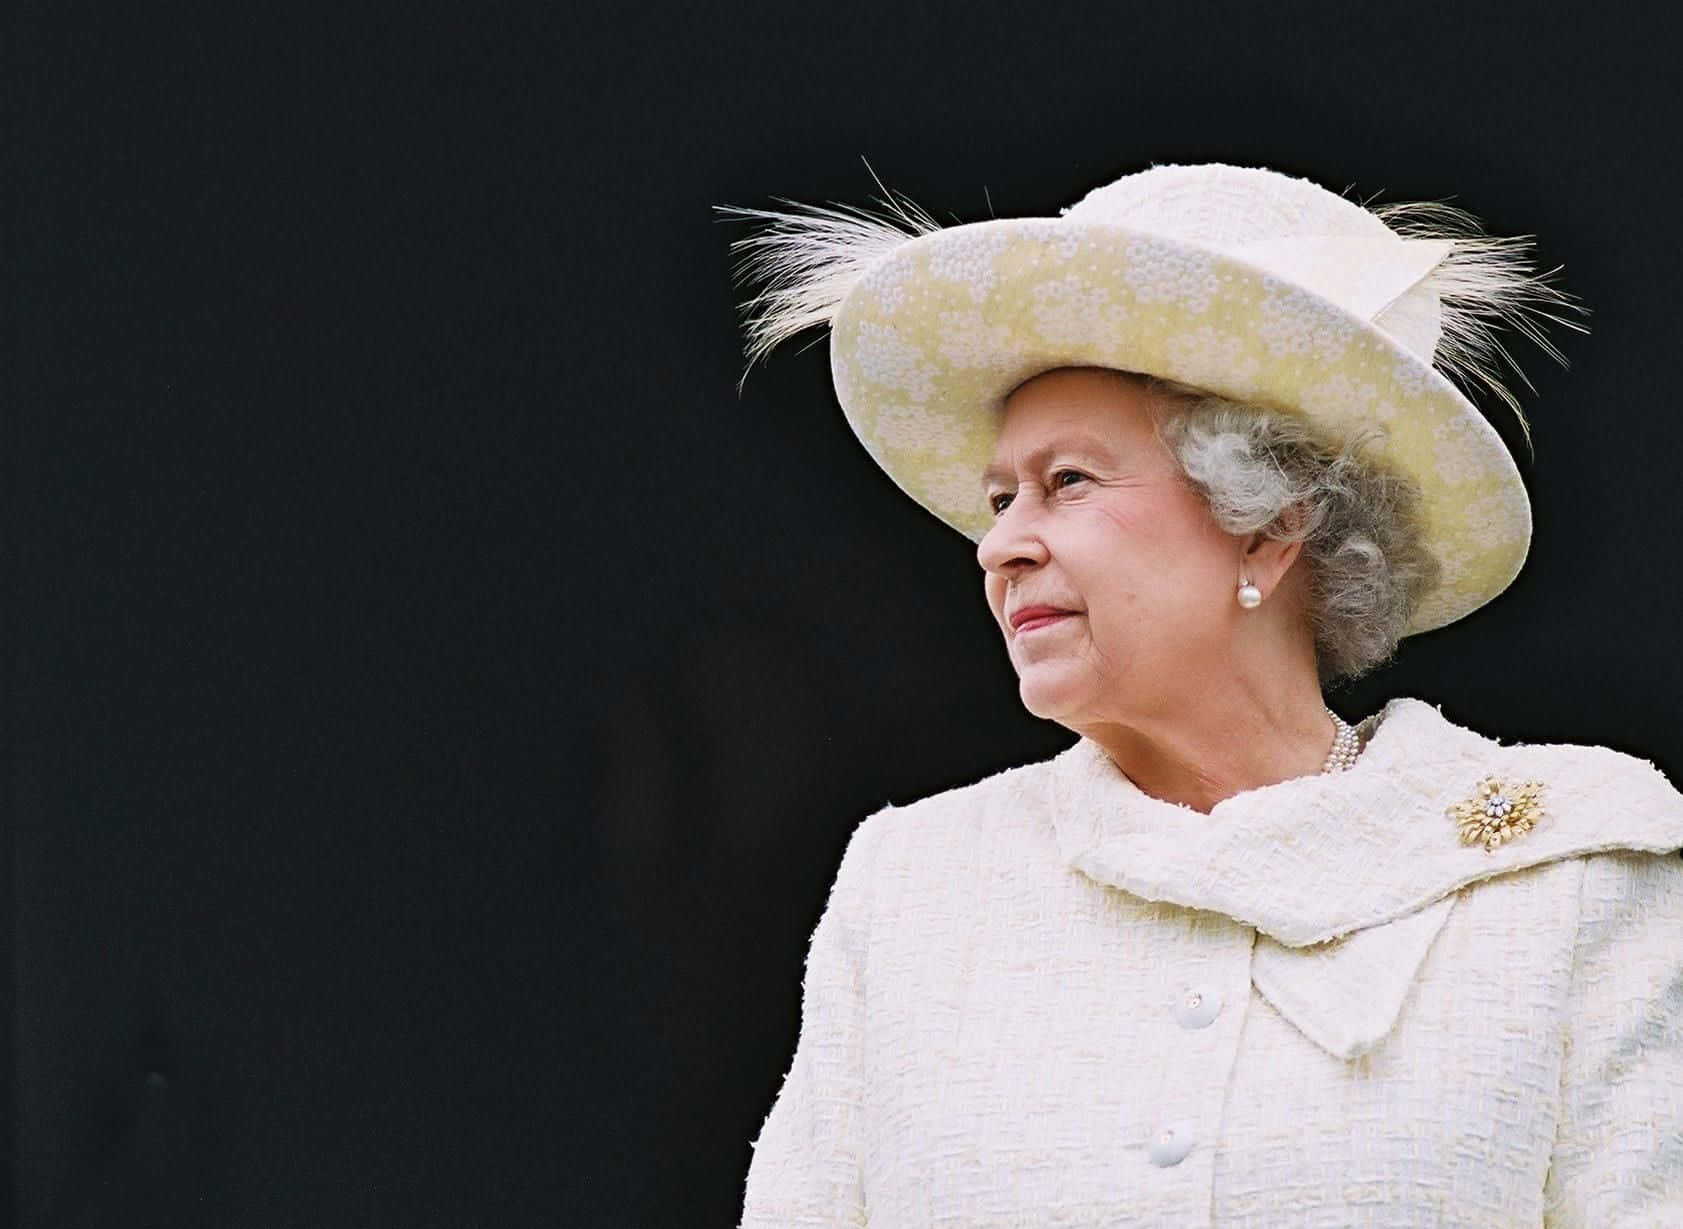 Caption: A regal portrait of Queen Elizabeth II